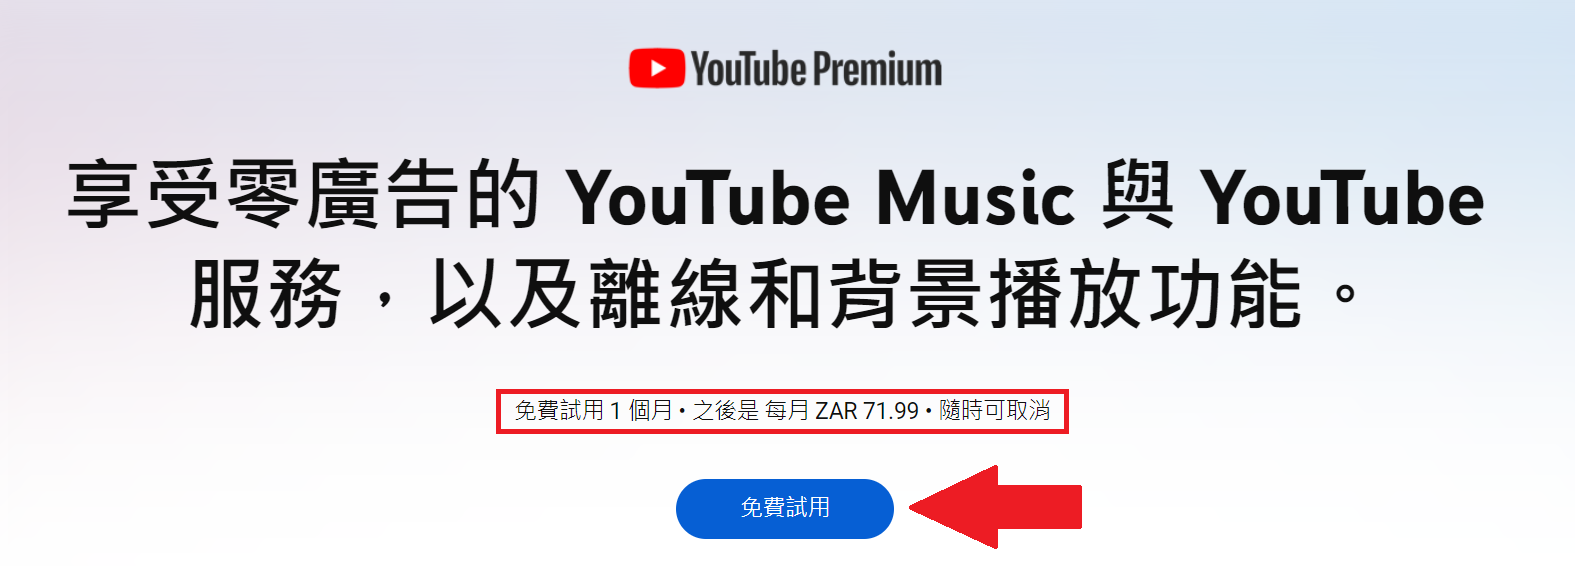 Youtube Premium 免費試用